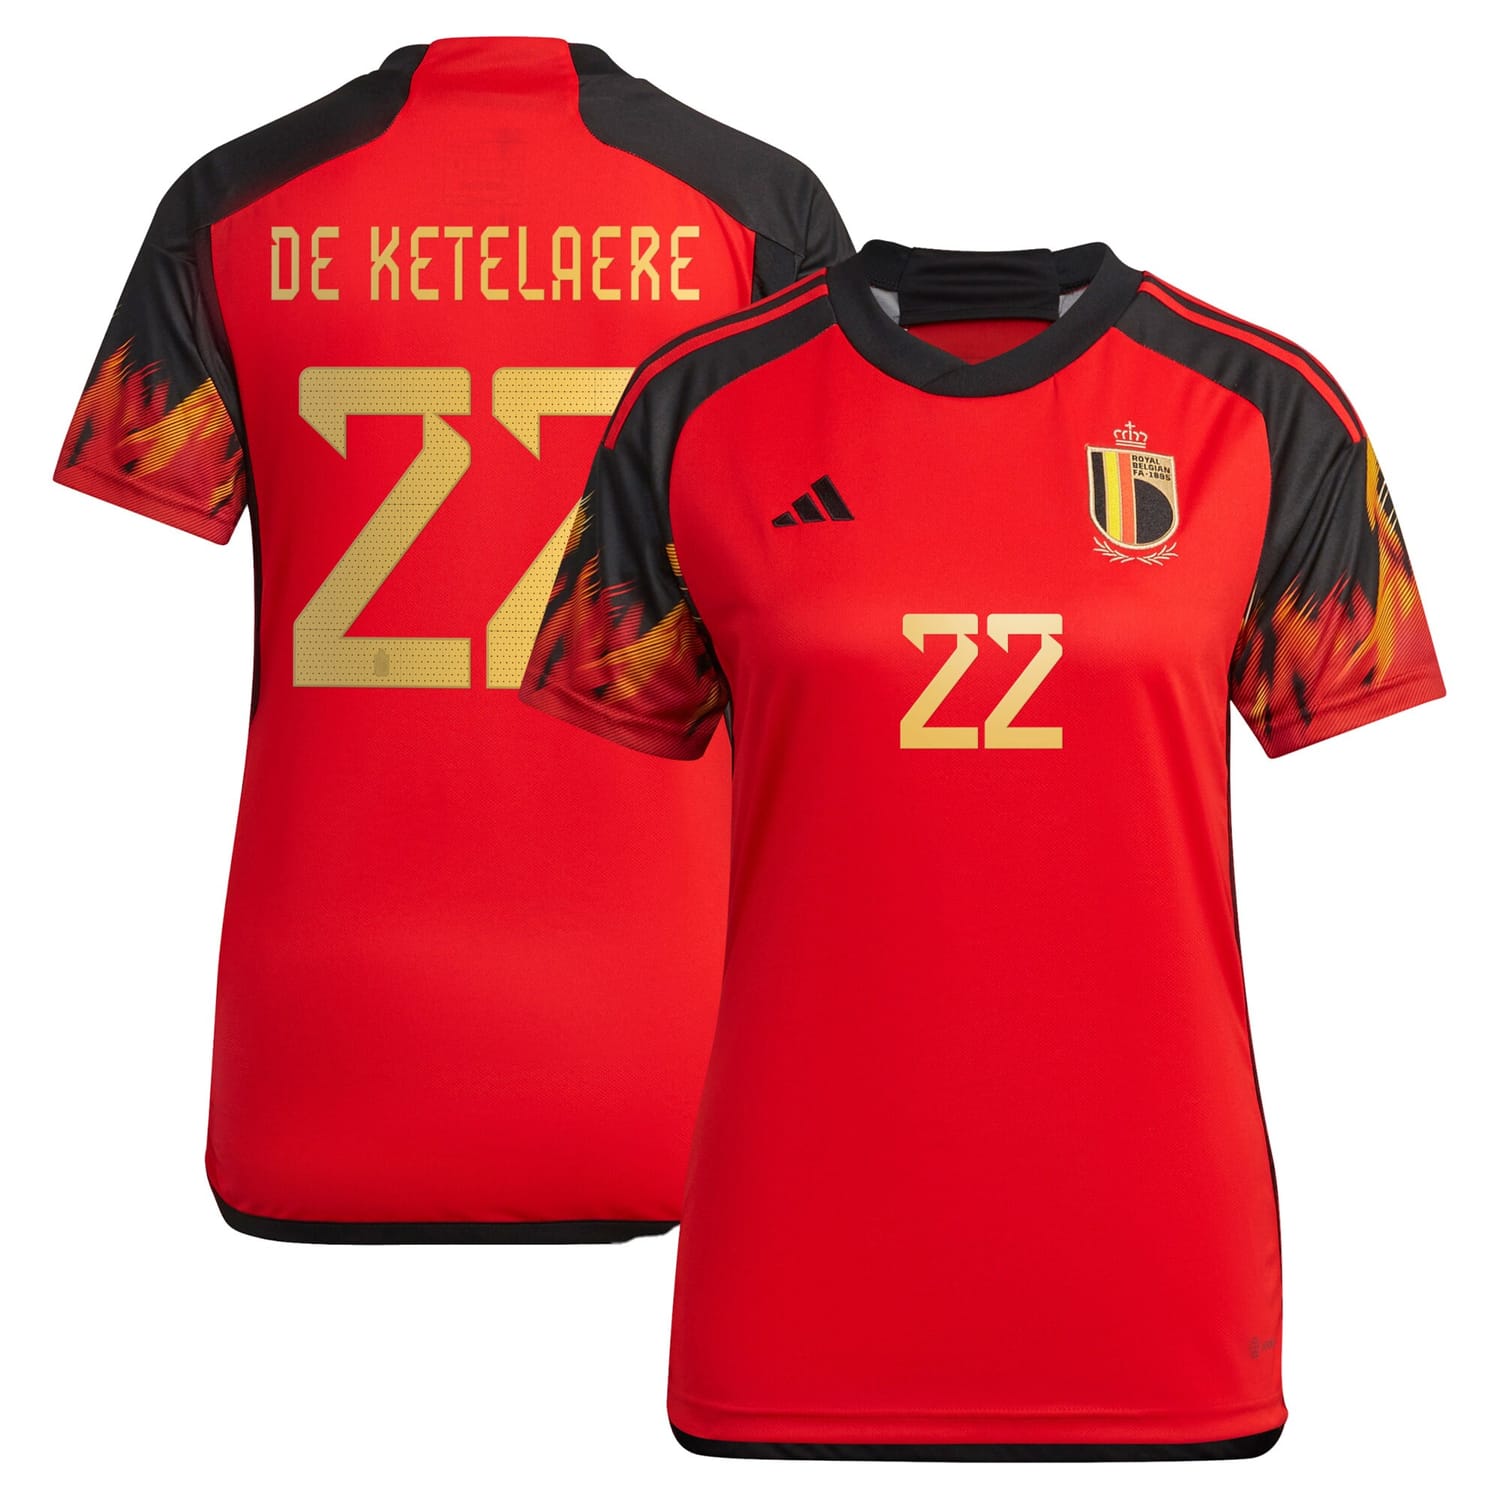 Belgium National Team Home Jersey Shirt 2022 player Charles De Ketelaere 22 printing for Women